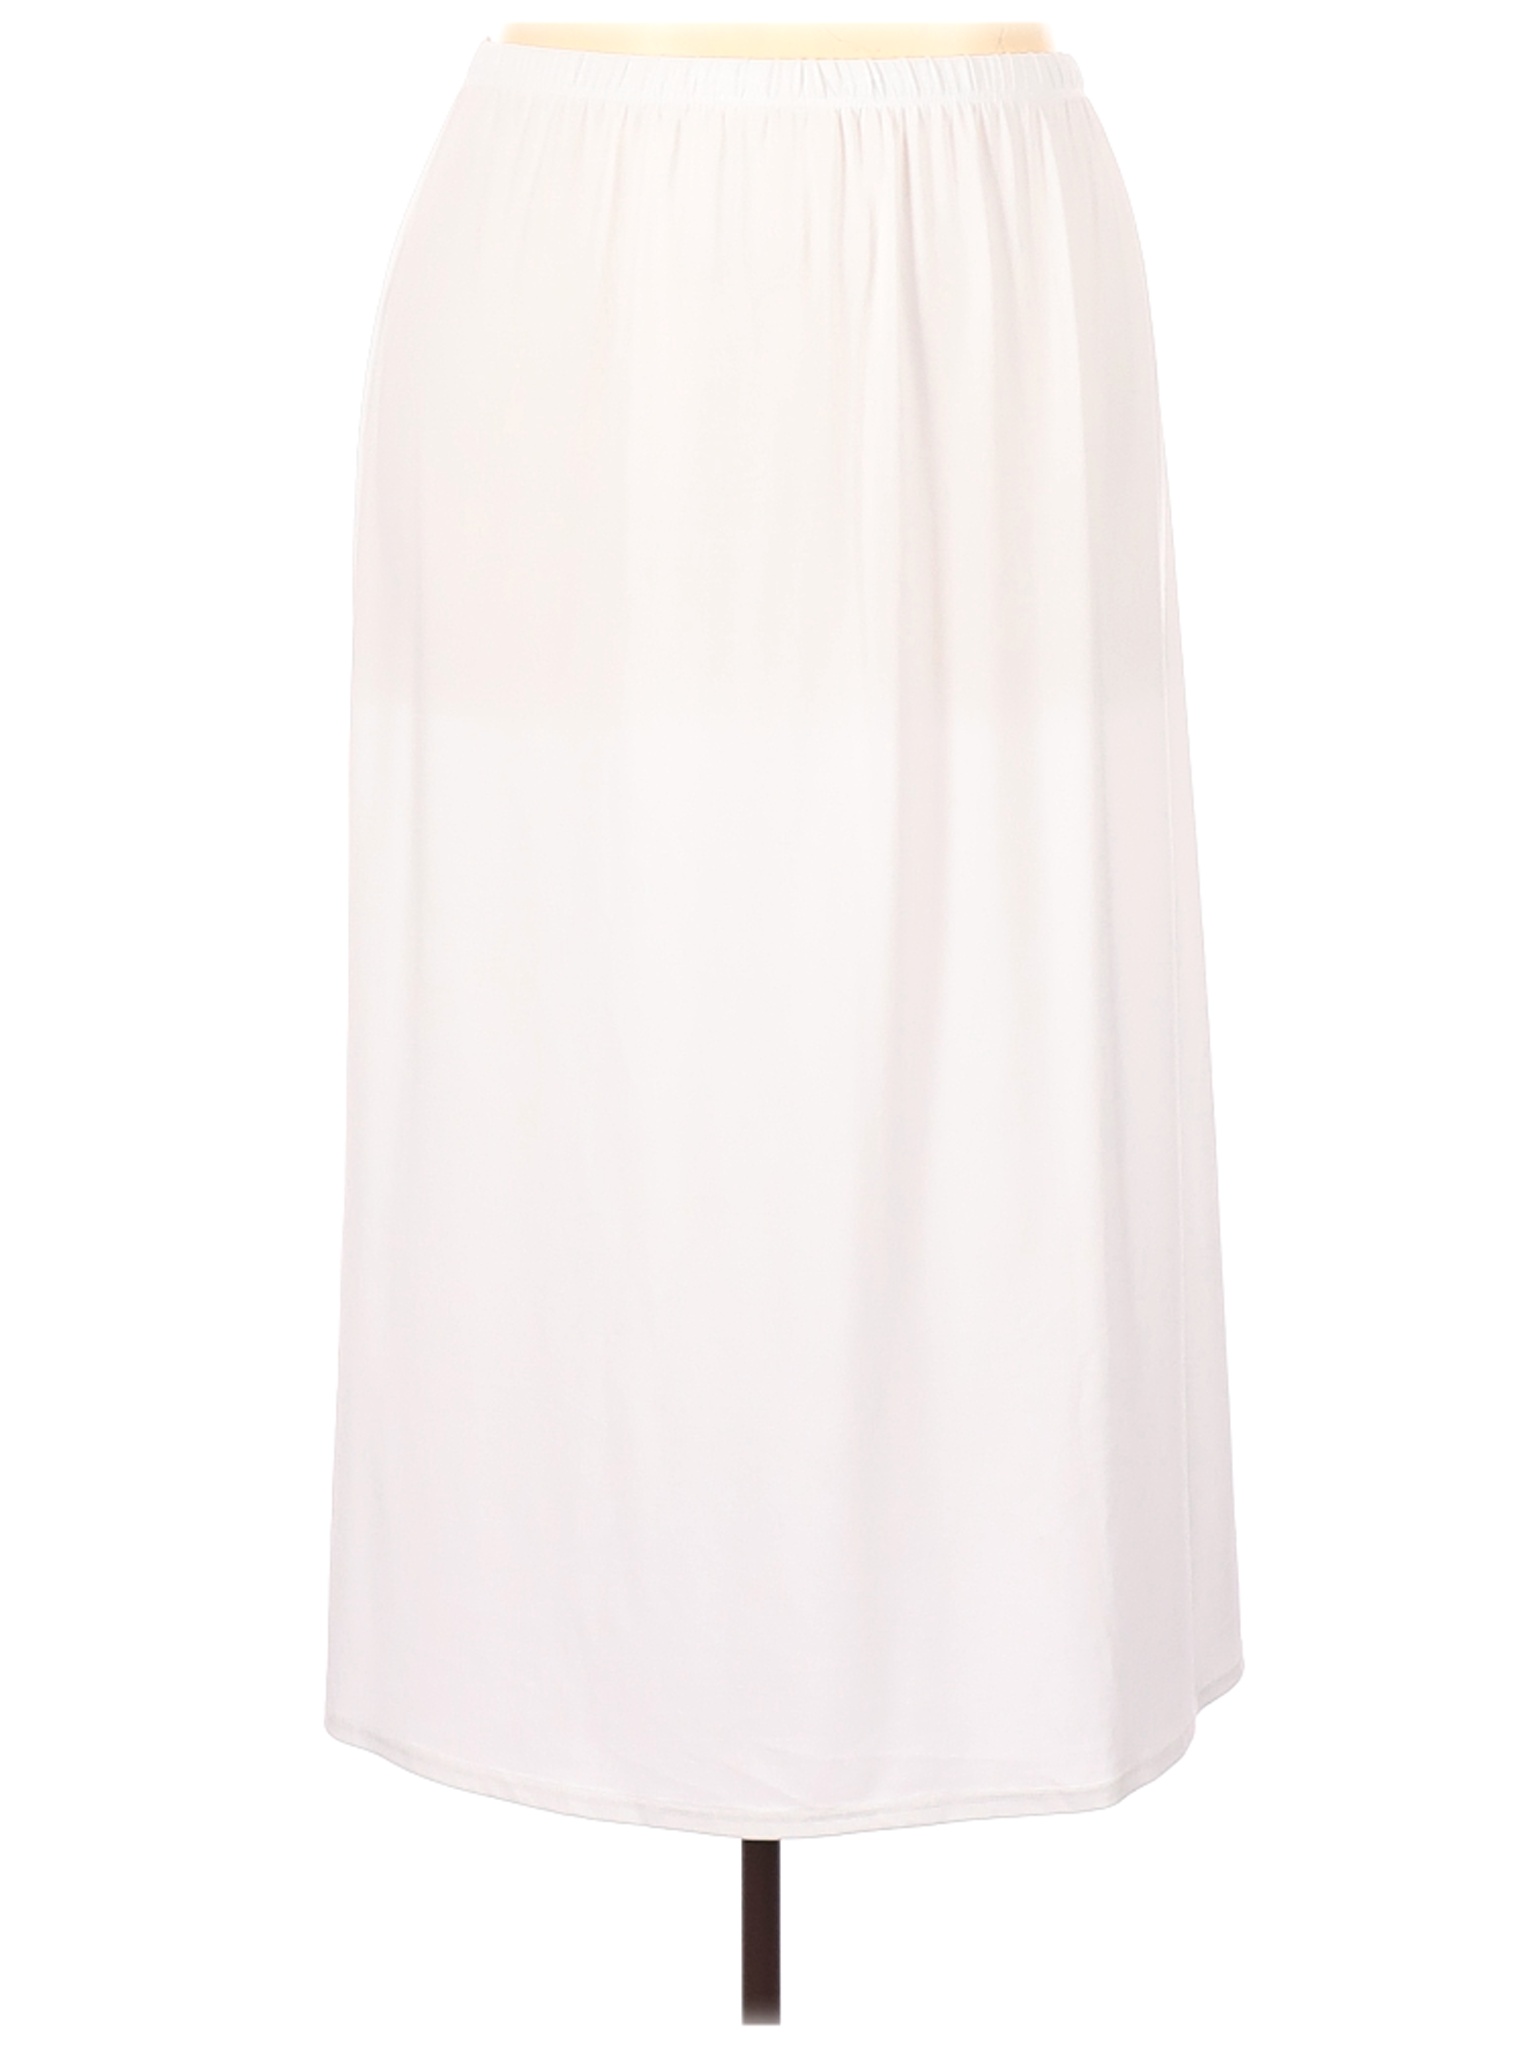 JL Studio Women Ivory Casual Skirt 2X Plus | eBay